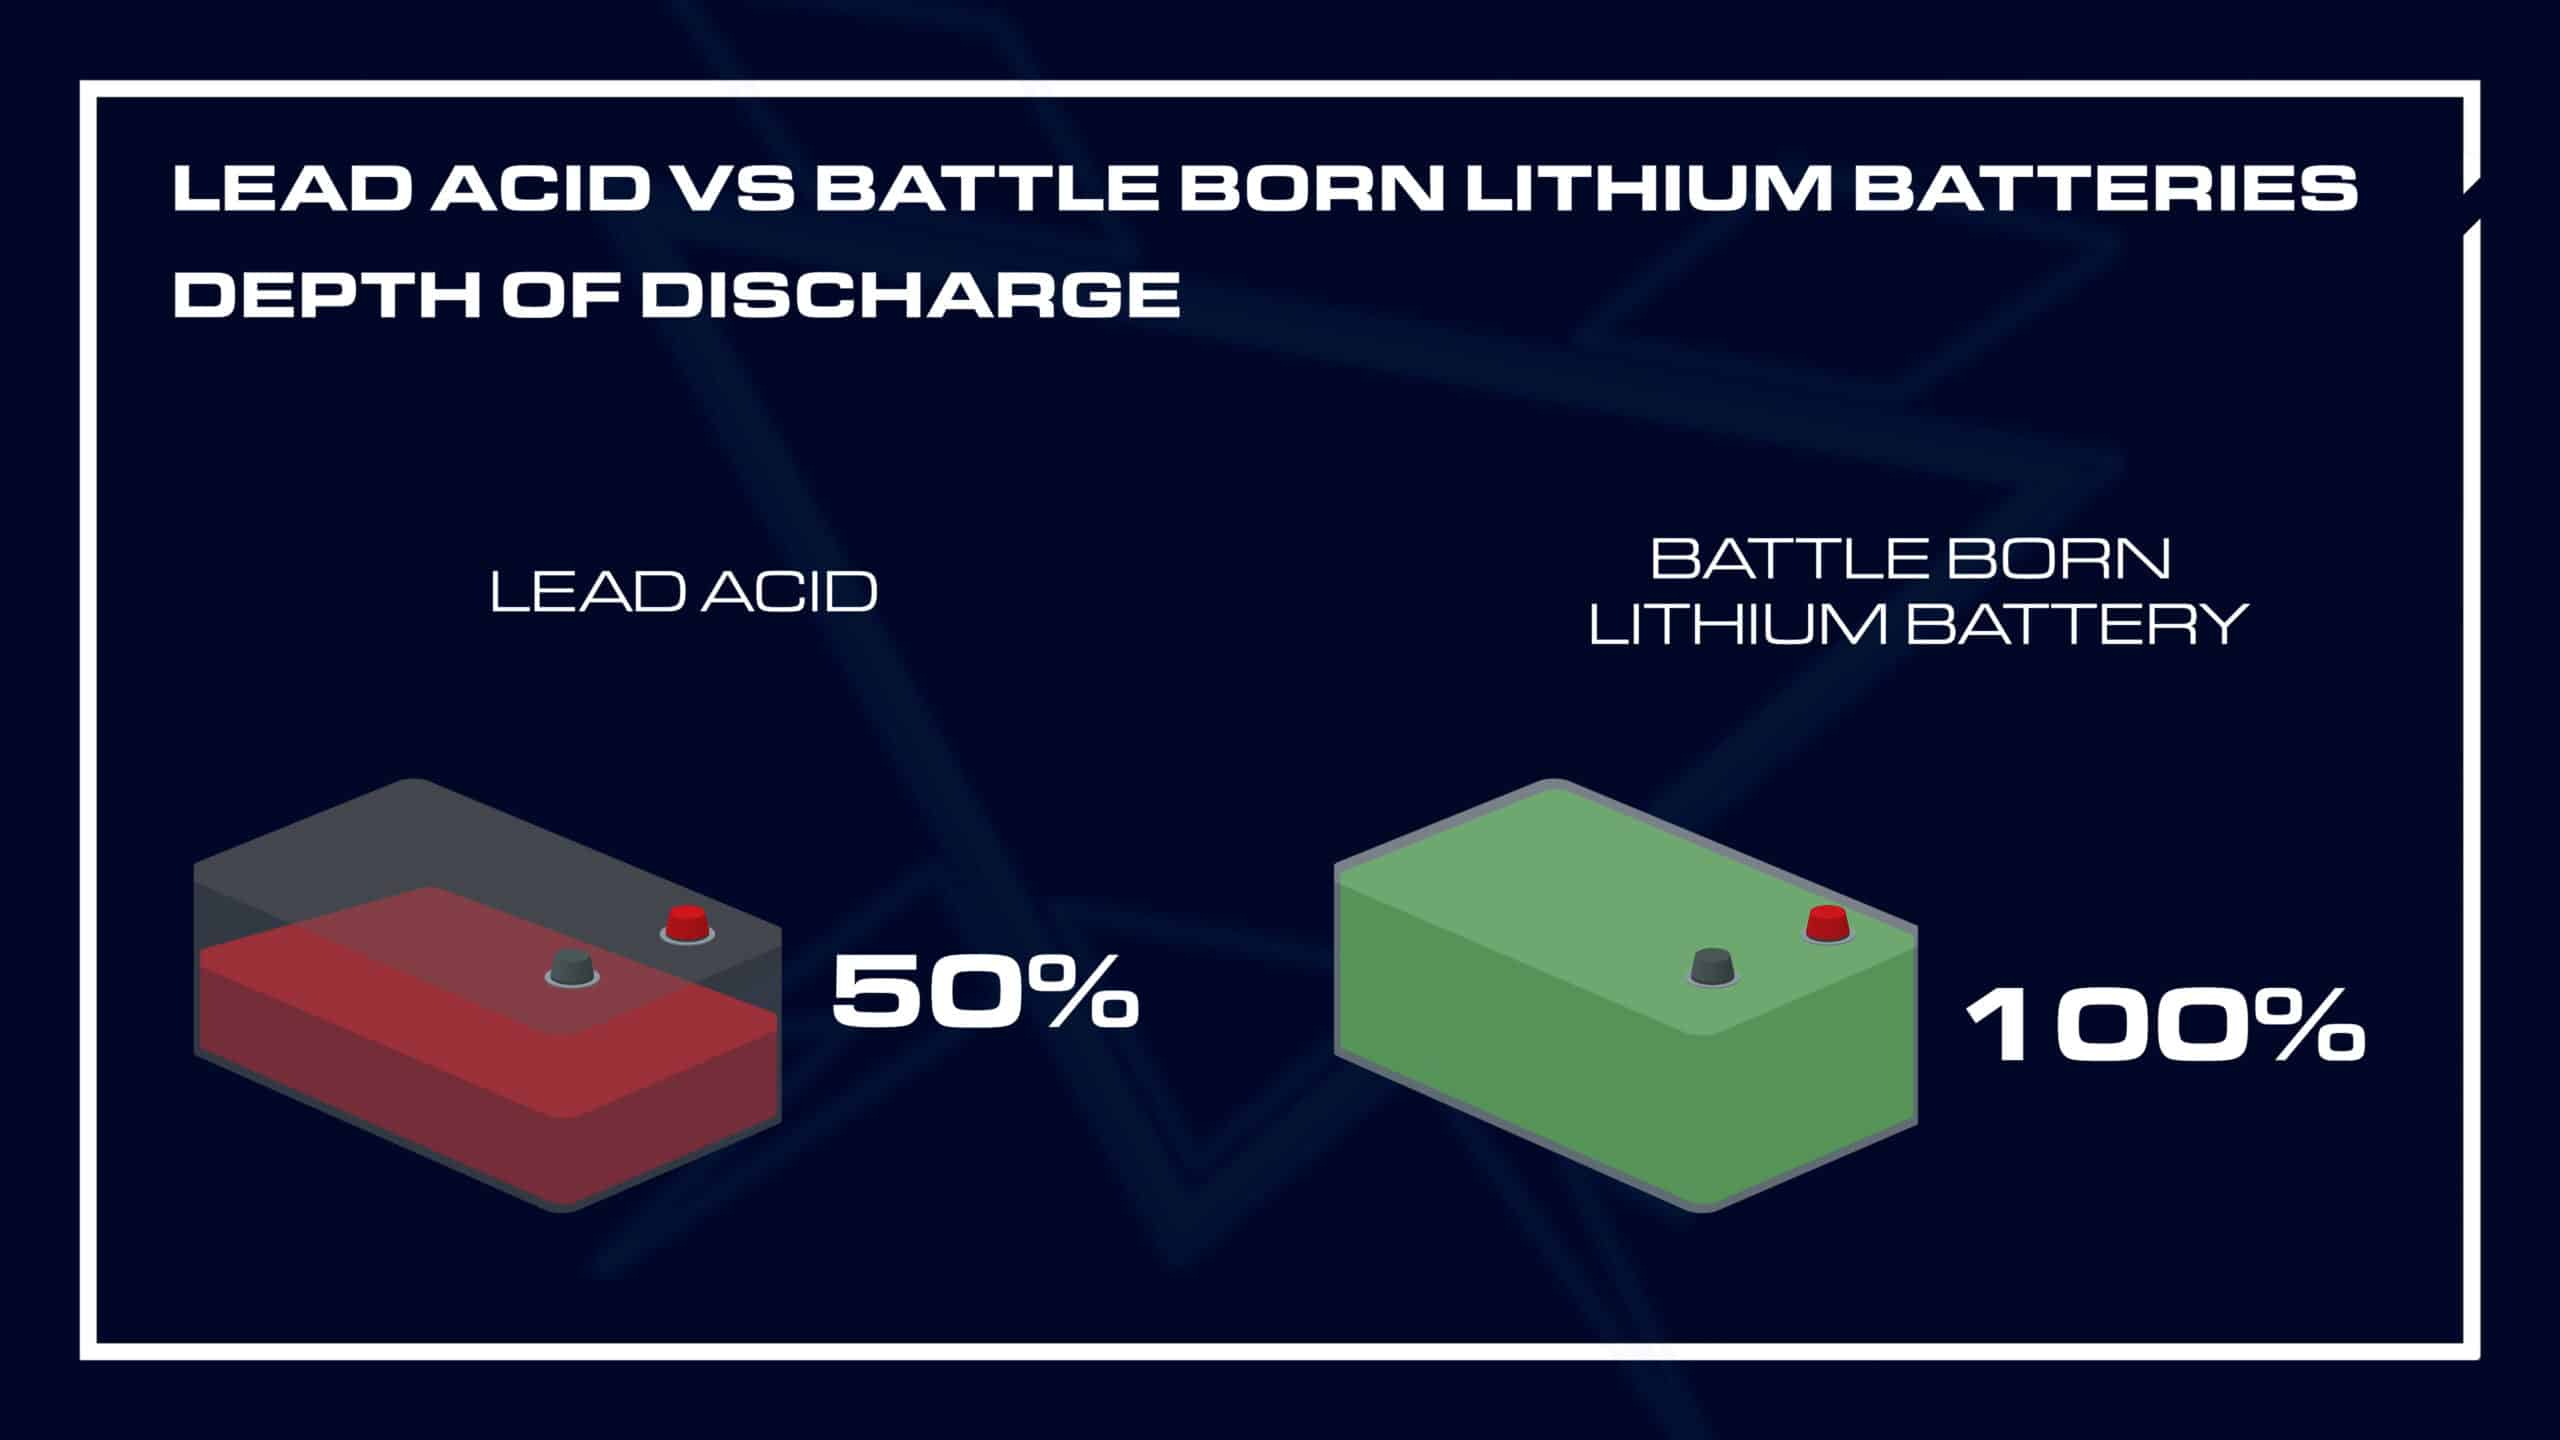 Visual representation of lead acid vs. batthe born lithium batteries depth of discharge